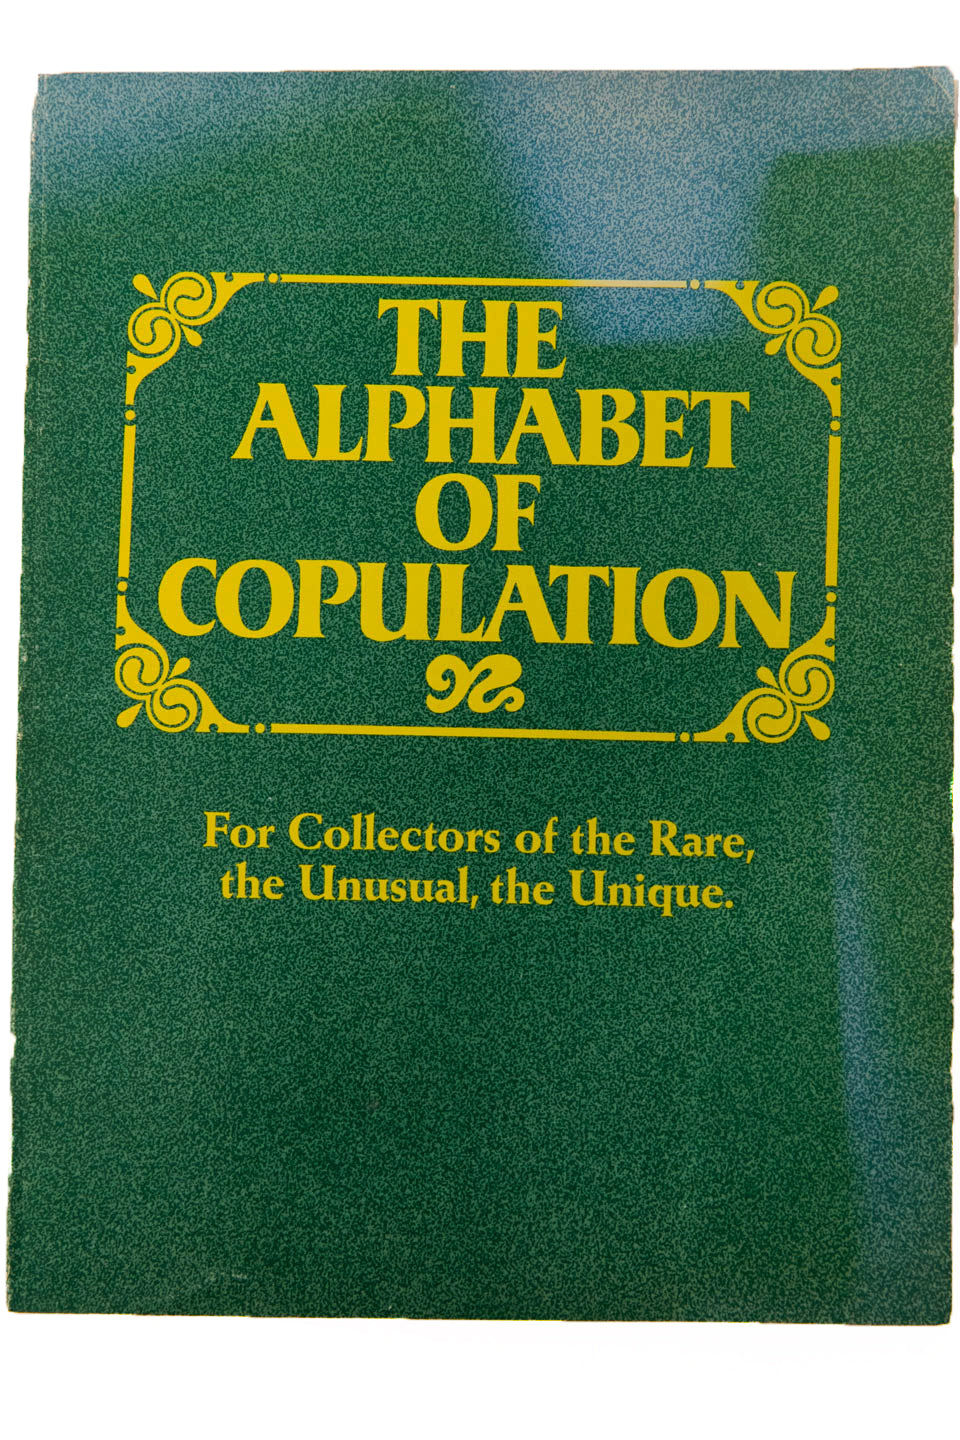 THE ALPHABET OF COPULATION